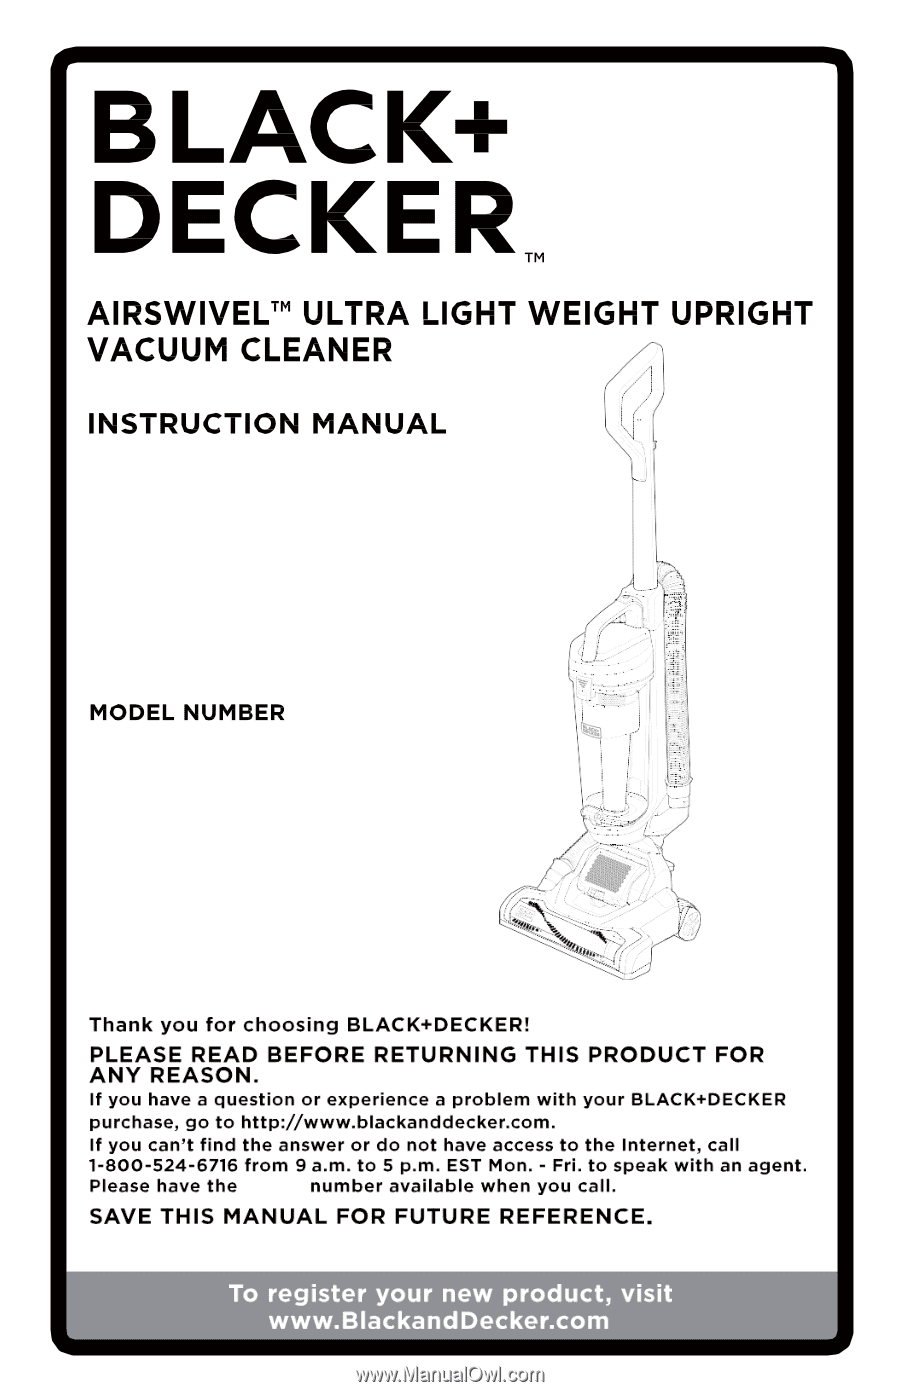 https://www.manualowl.com/manual_guide/products/black-decker-bdasv102-instruction-manual-6fcd2b7/1.png